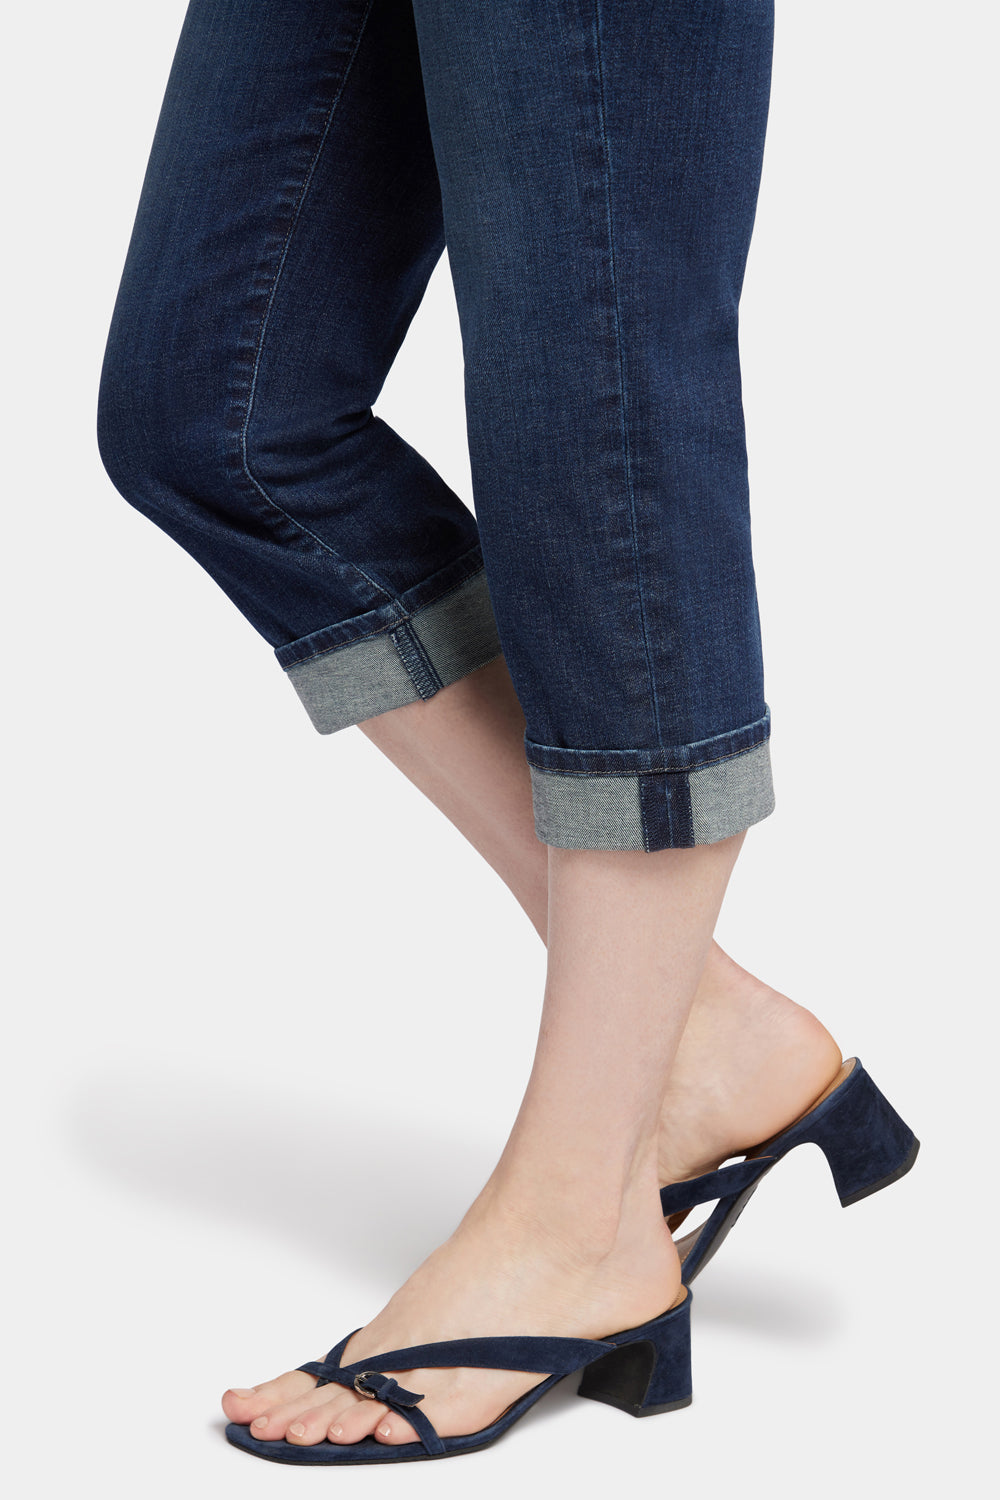 NYDJ Marilyn Straight Crop Jeans With Cuffs - Dimension